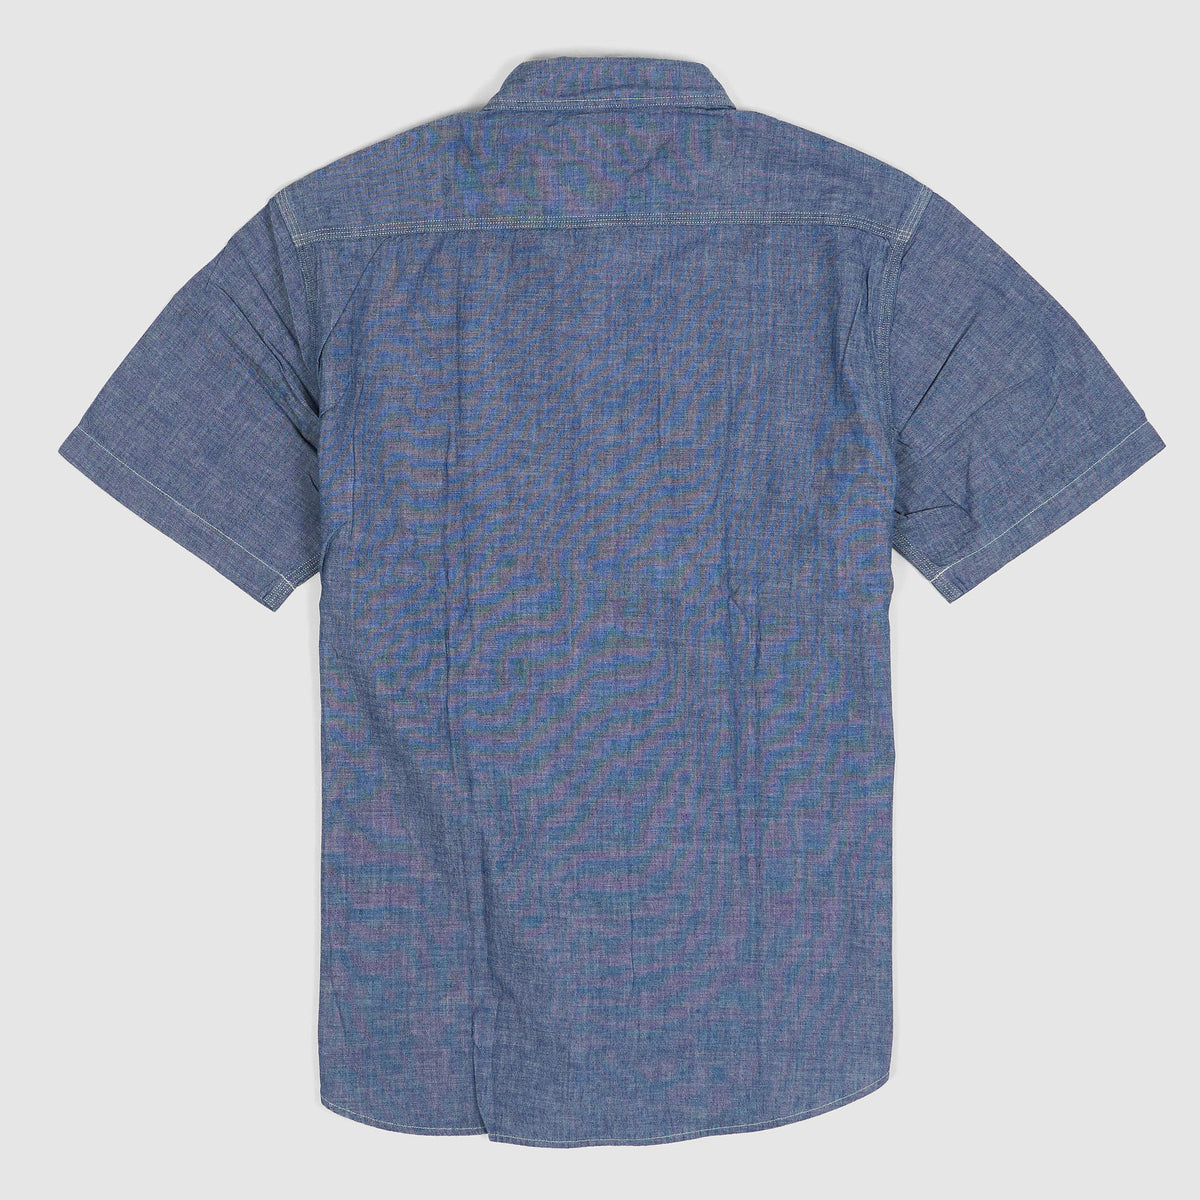 Double RL Indigo Chambray Work shirt Short Sleeves